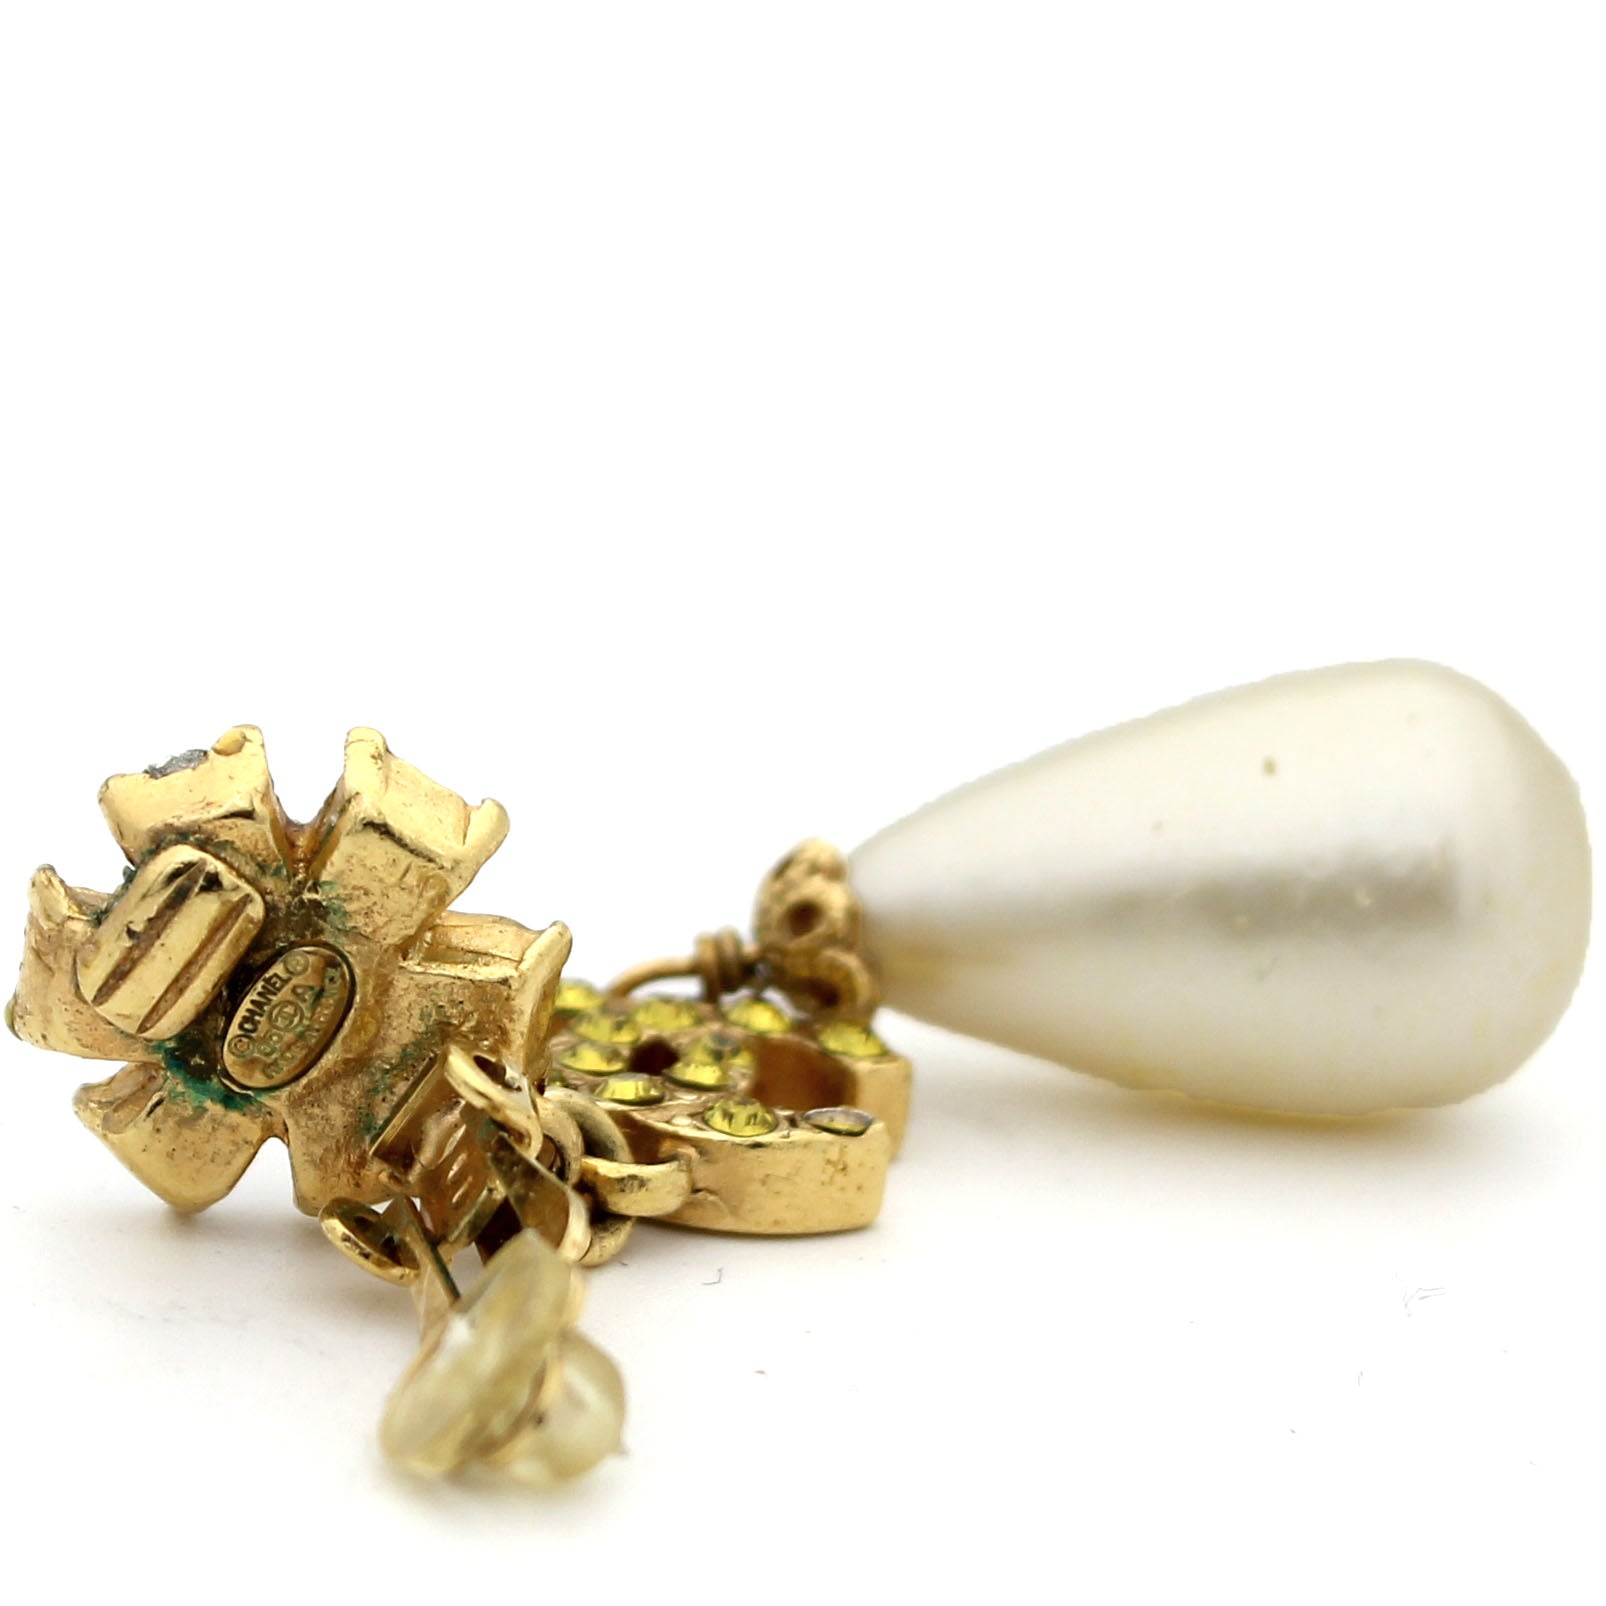 Vintage Clip on Drop Pearl Crystals Logo Earrings